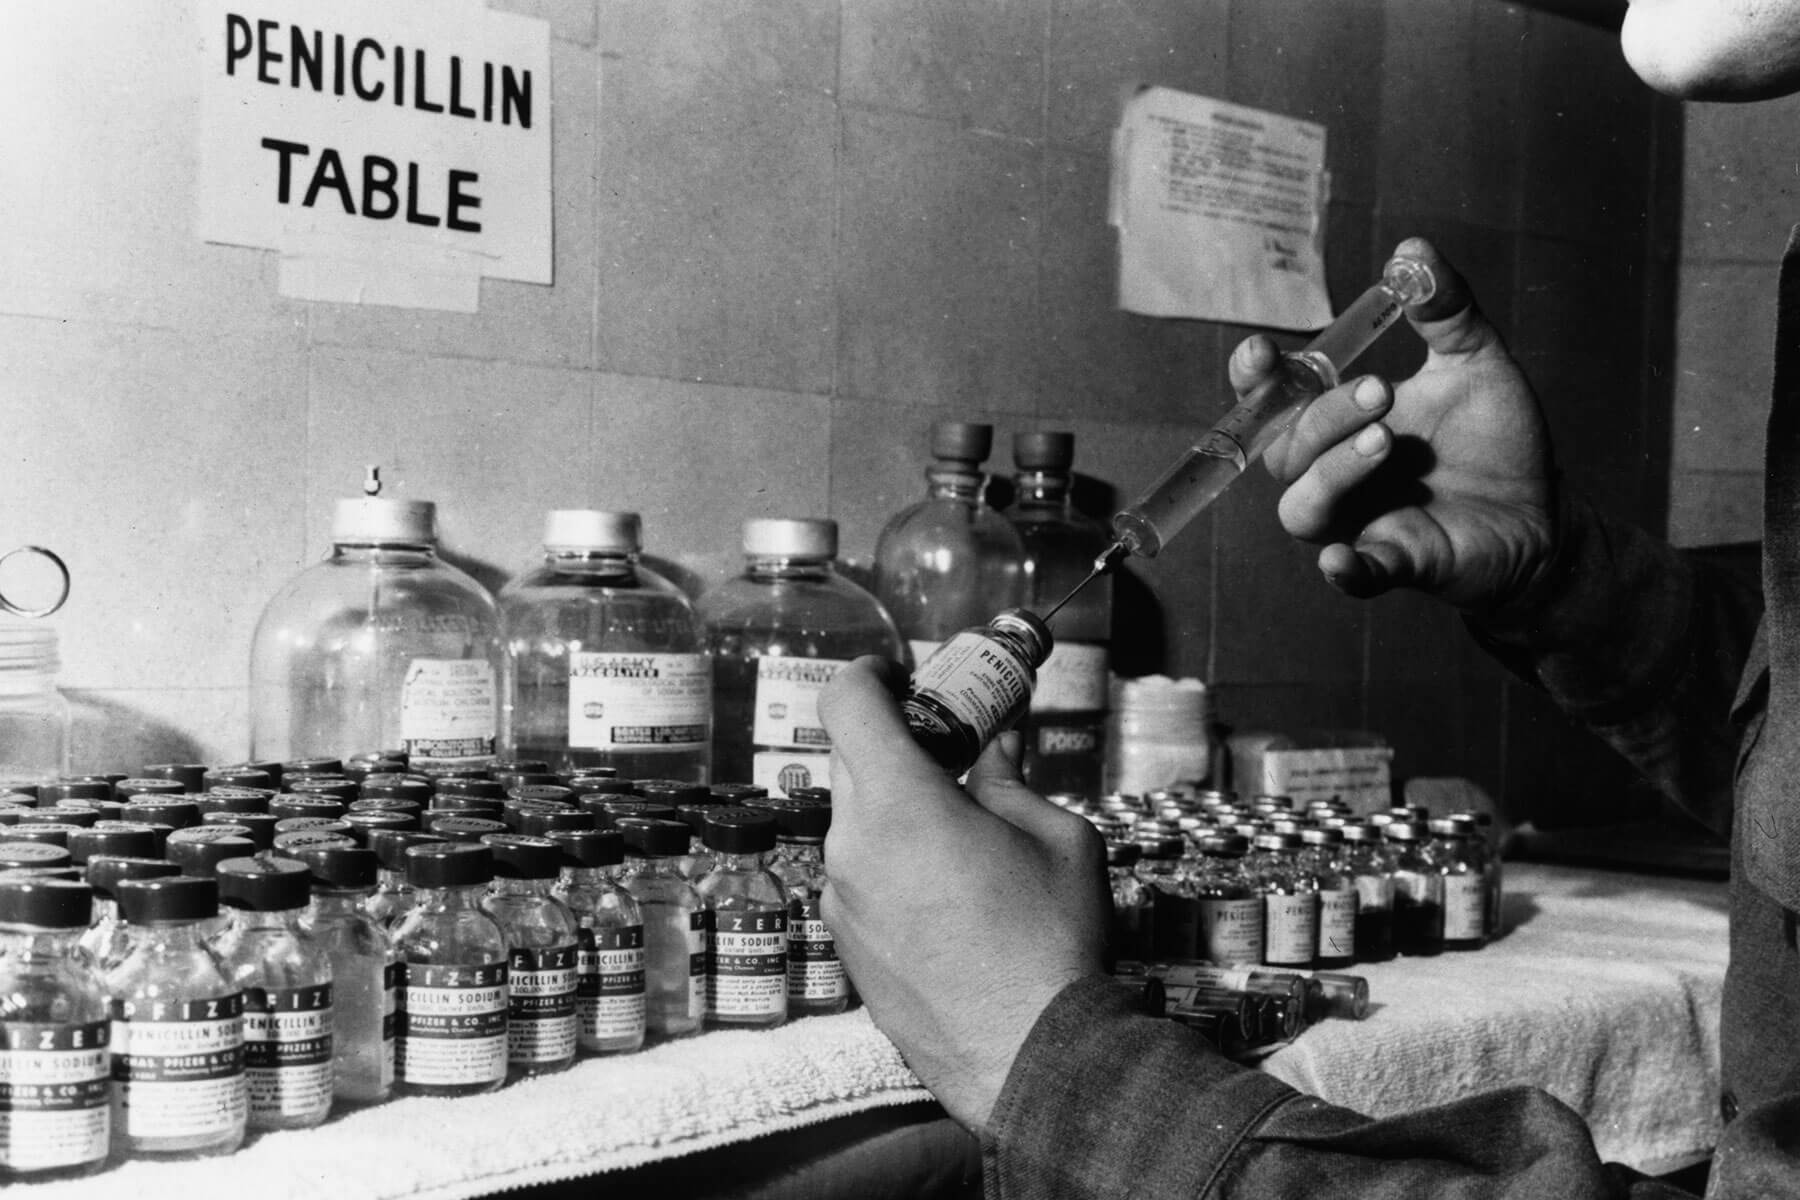 Penicillin vials